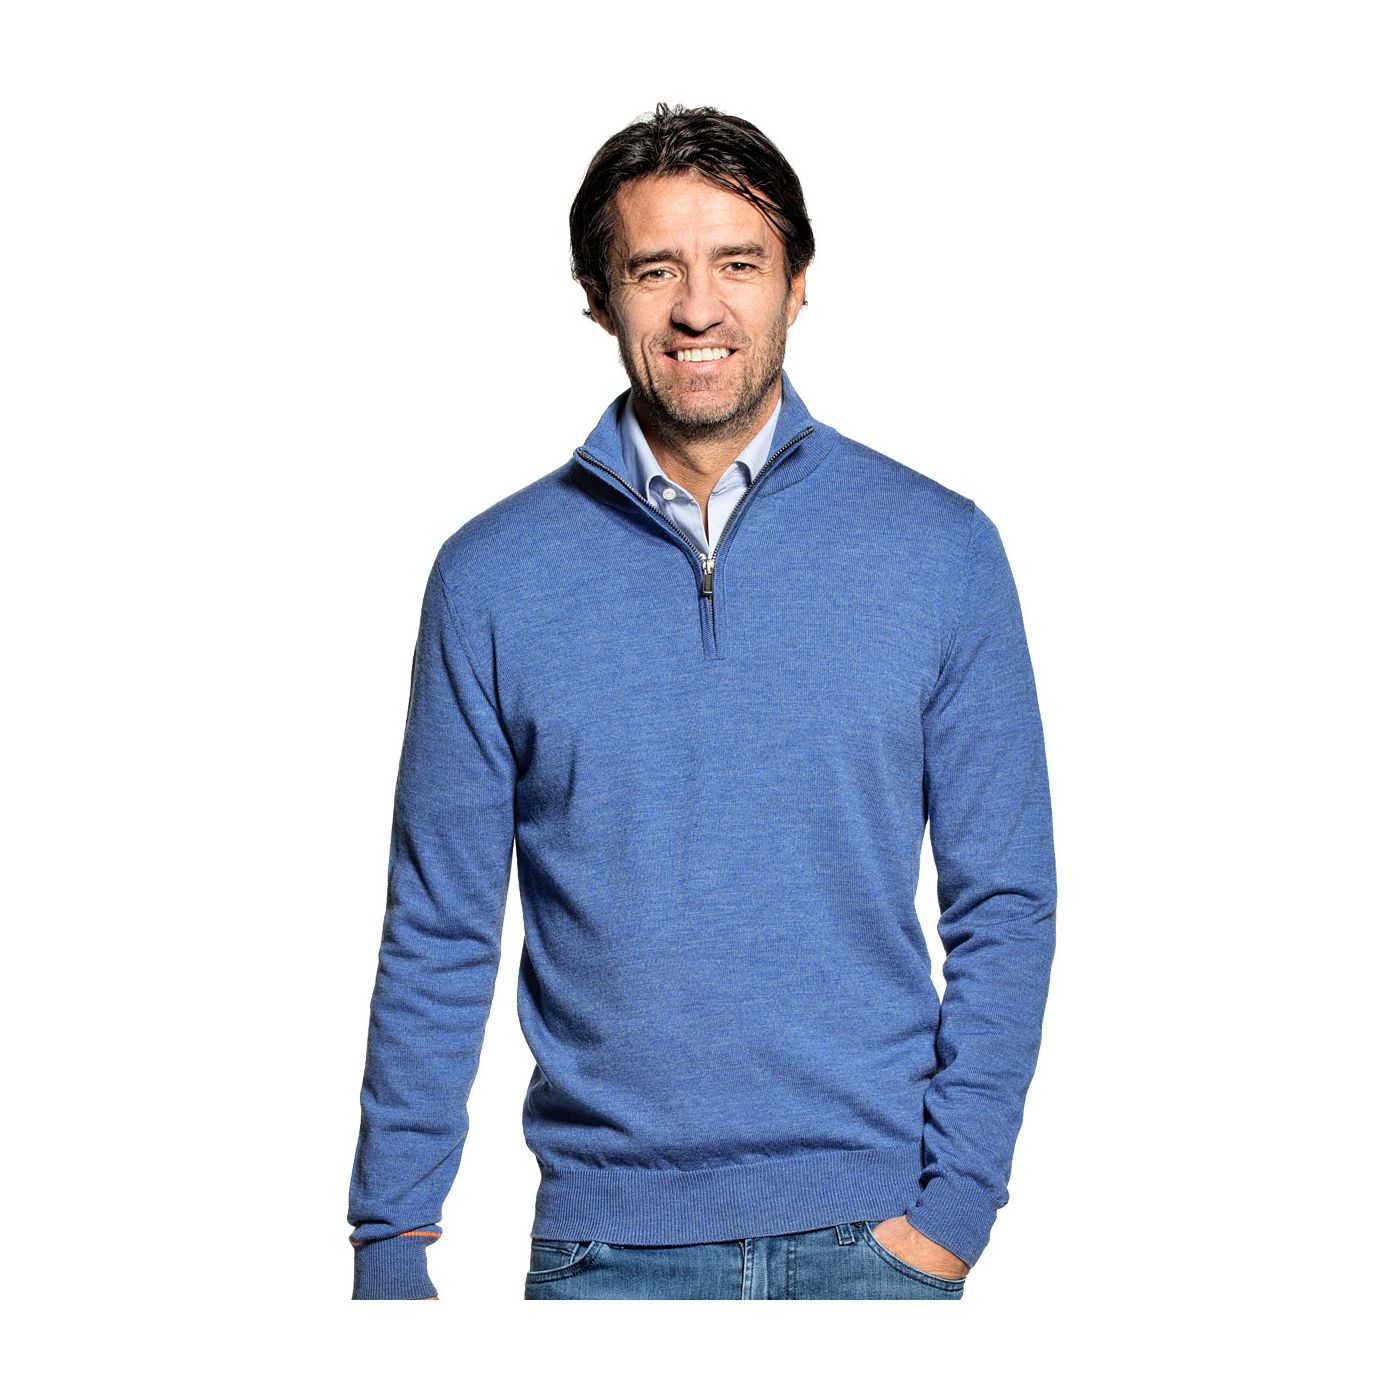 Half zip sweater for men made of Merino wool in Bright blue